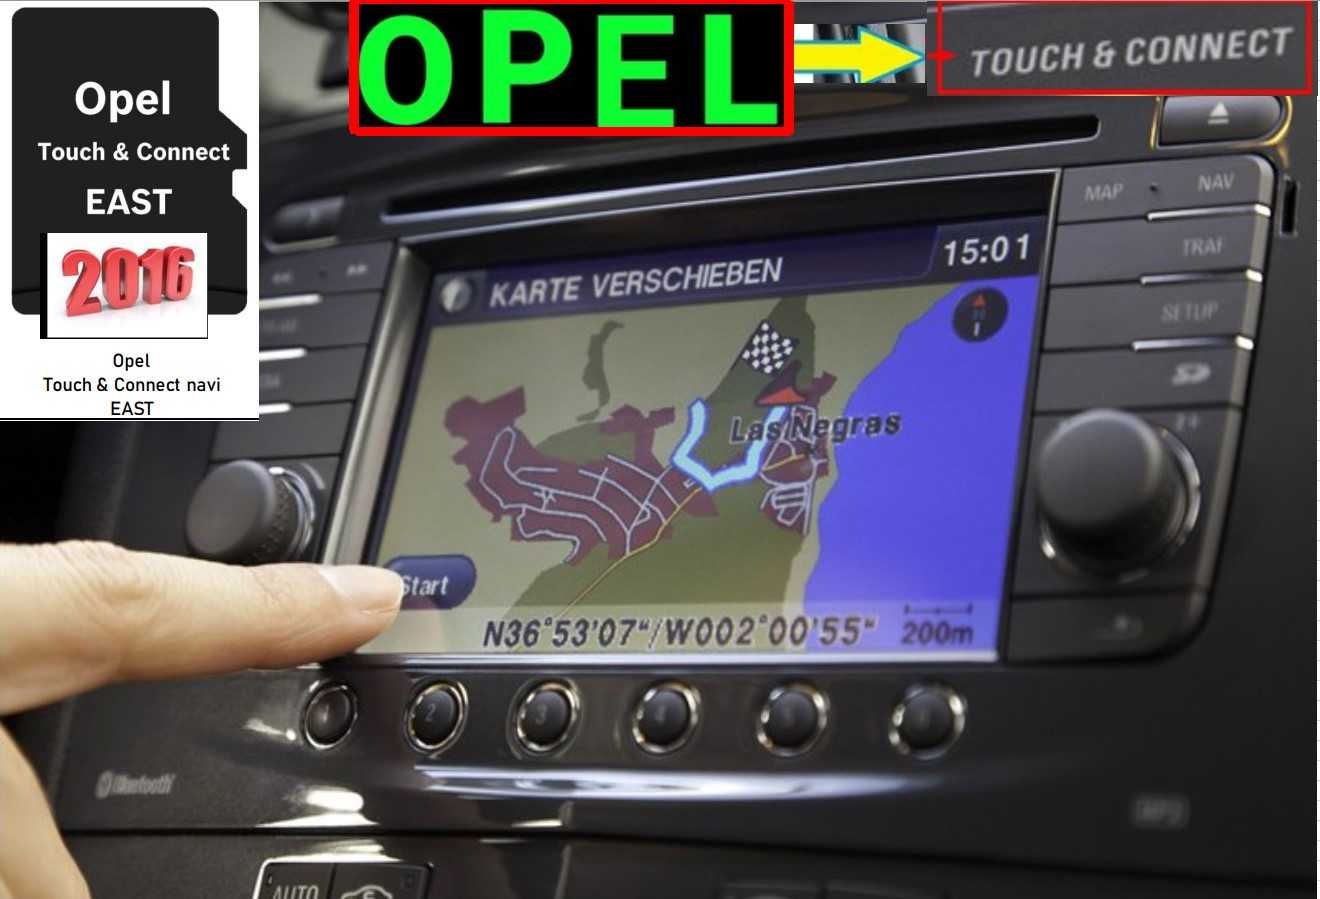 2020 Opel Chevrolet NAVI 600/900 Sd card Навигация ъпдейт карта Опел